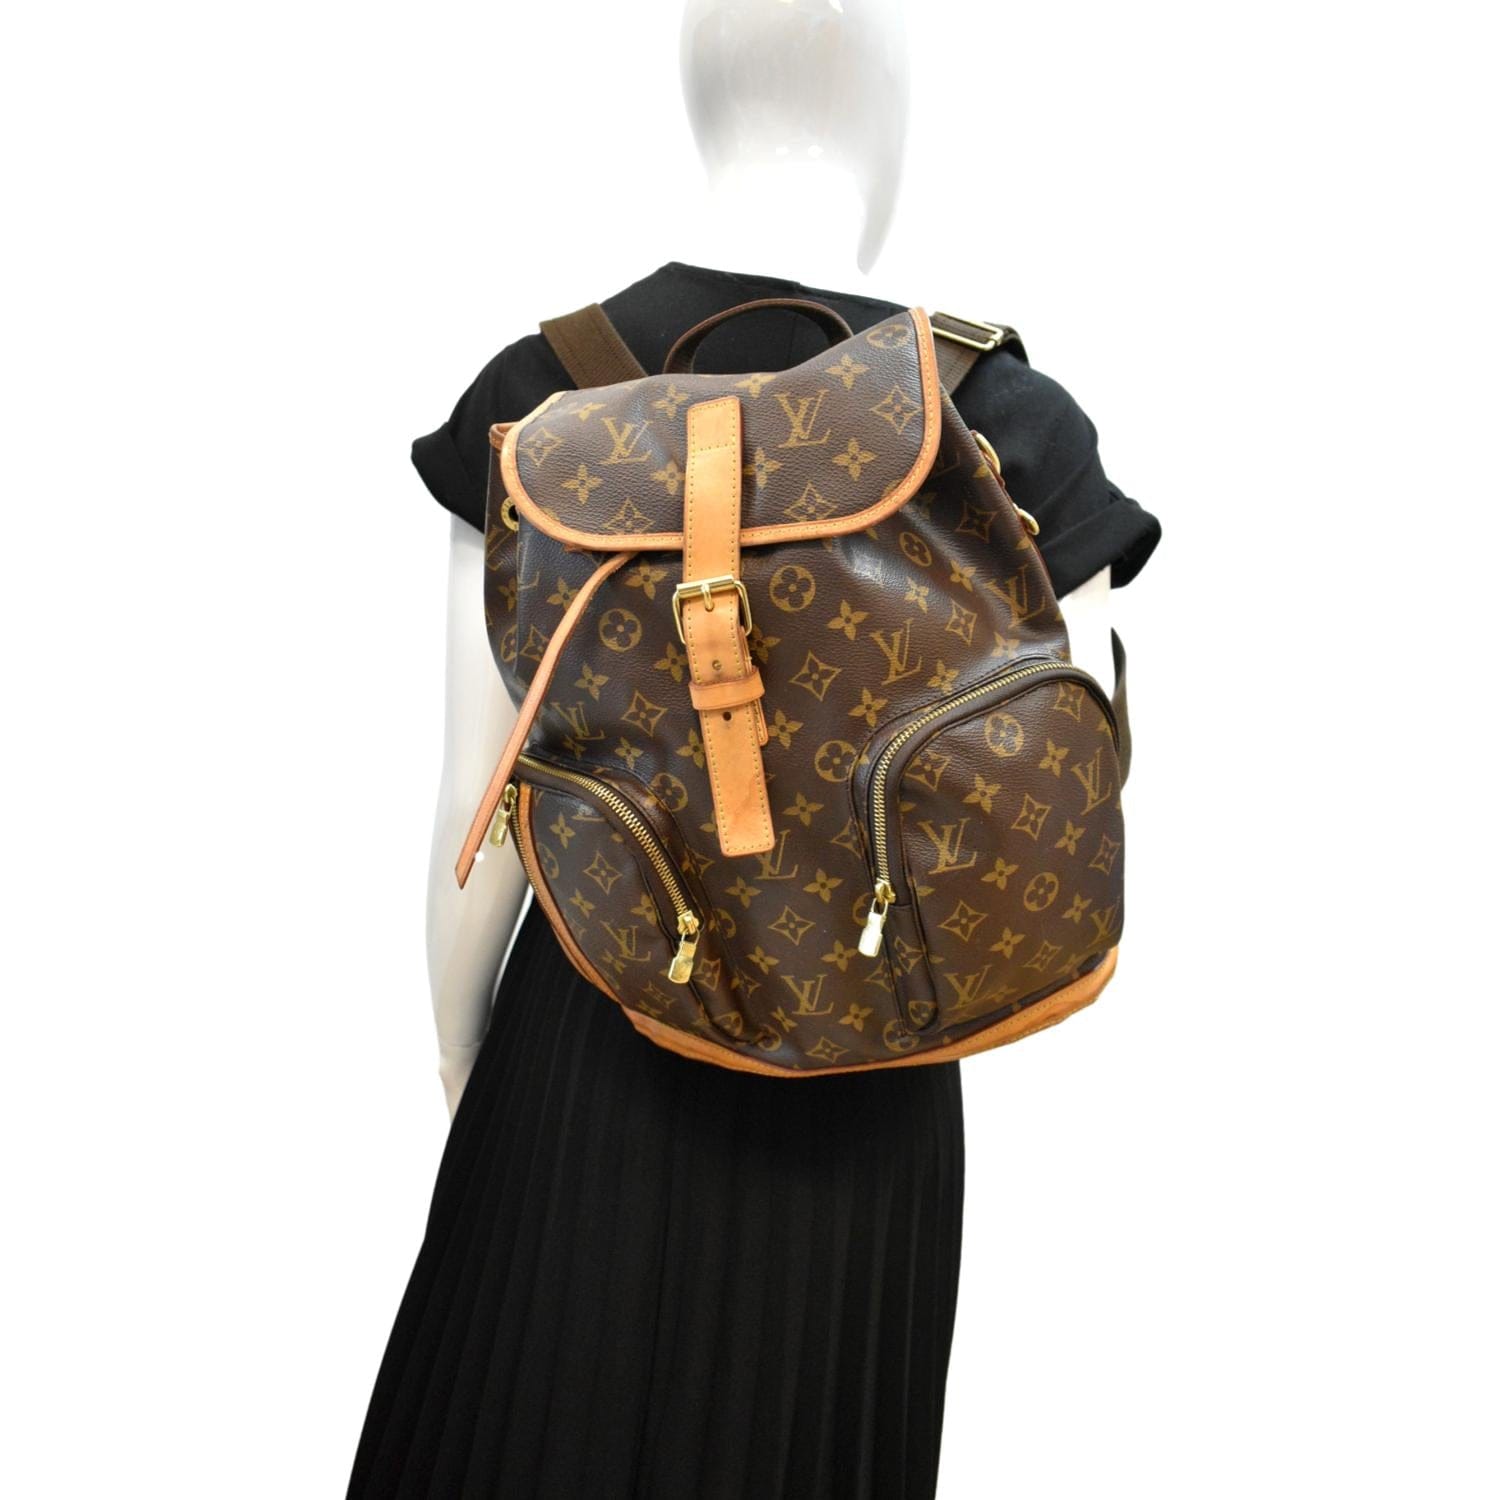 Vintage Louis Feraud Paris Backpack Style Bag 